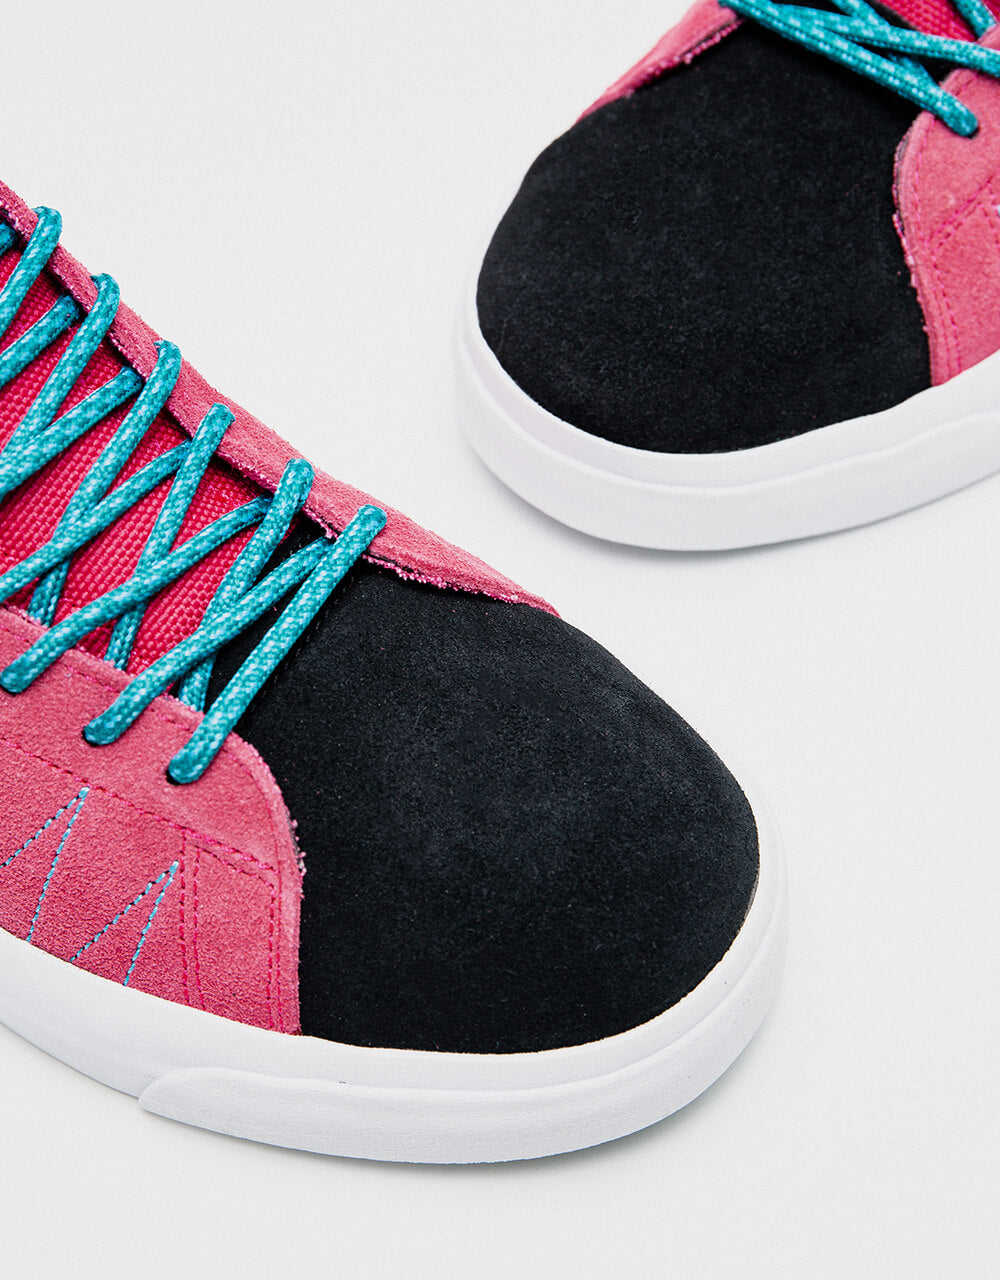 Nike SB Zoom Blazer Mid Premium Skate Shoes - Rush Pink/Deep Royal Blue-Laser Blue